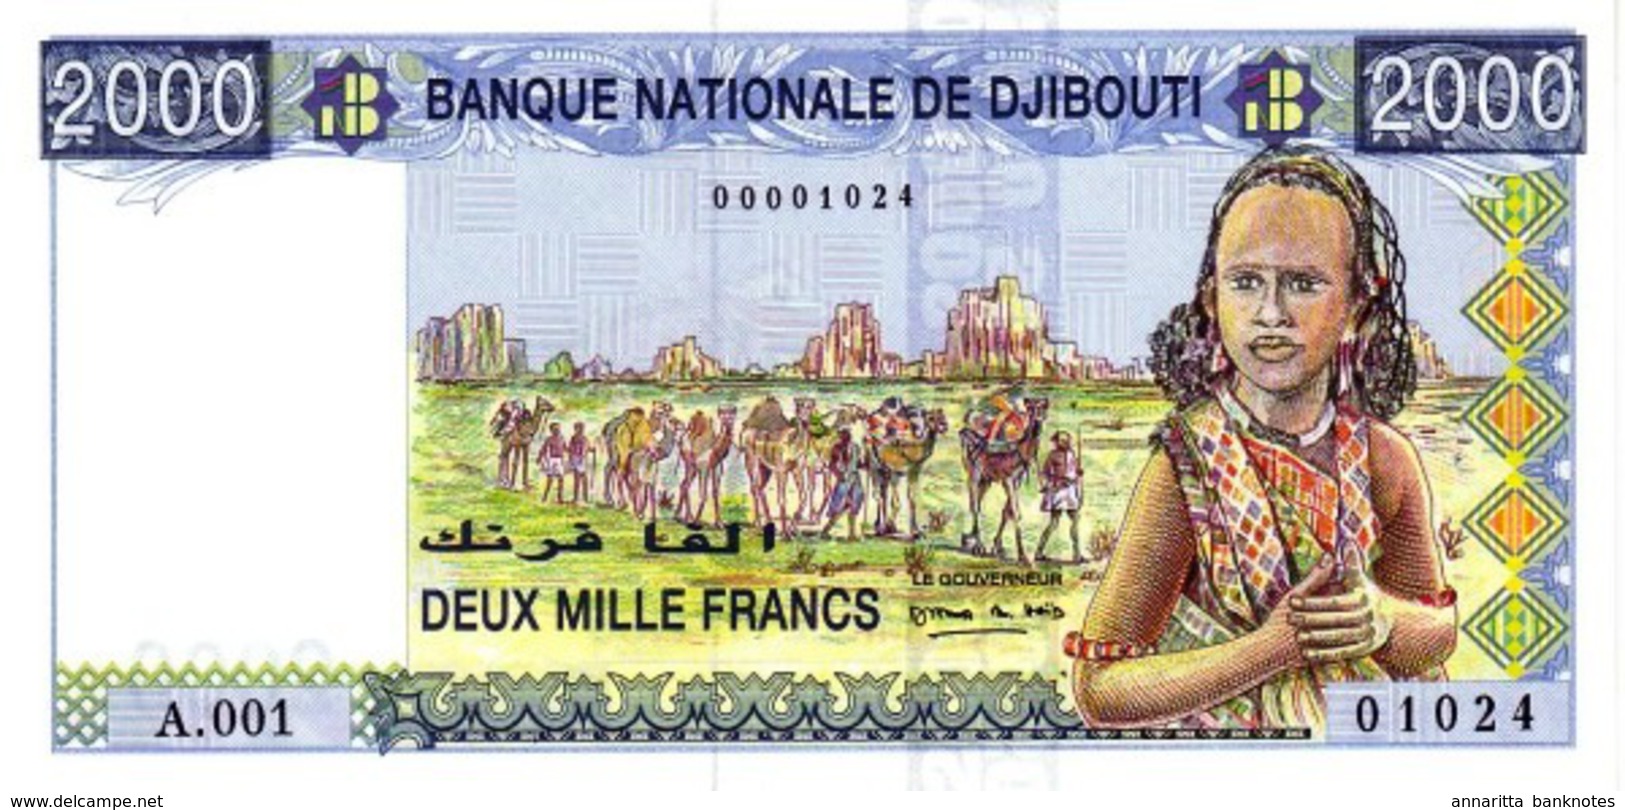 Djibouti (BND) 2000 Francs ND (1997) UNC Cat No. P-40a / DJ105a - Djibouti